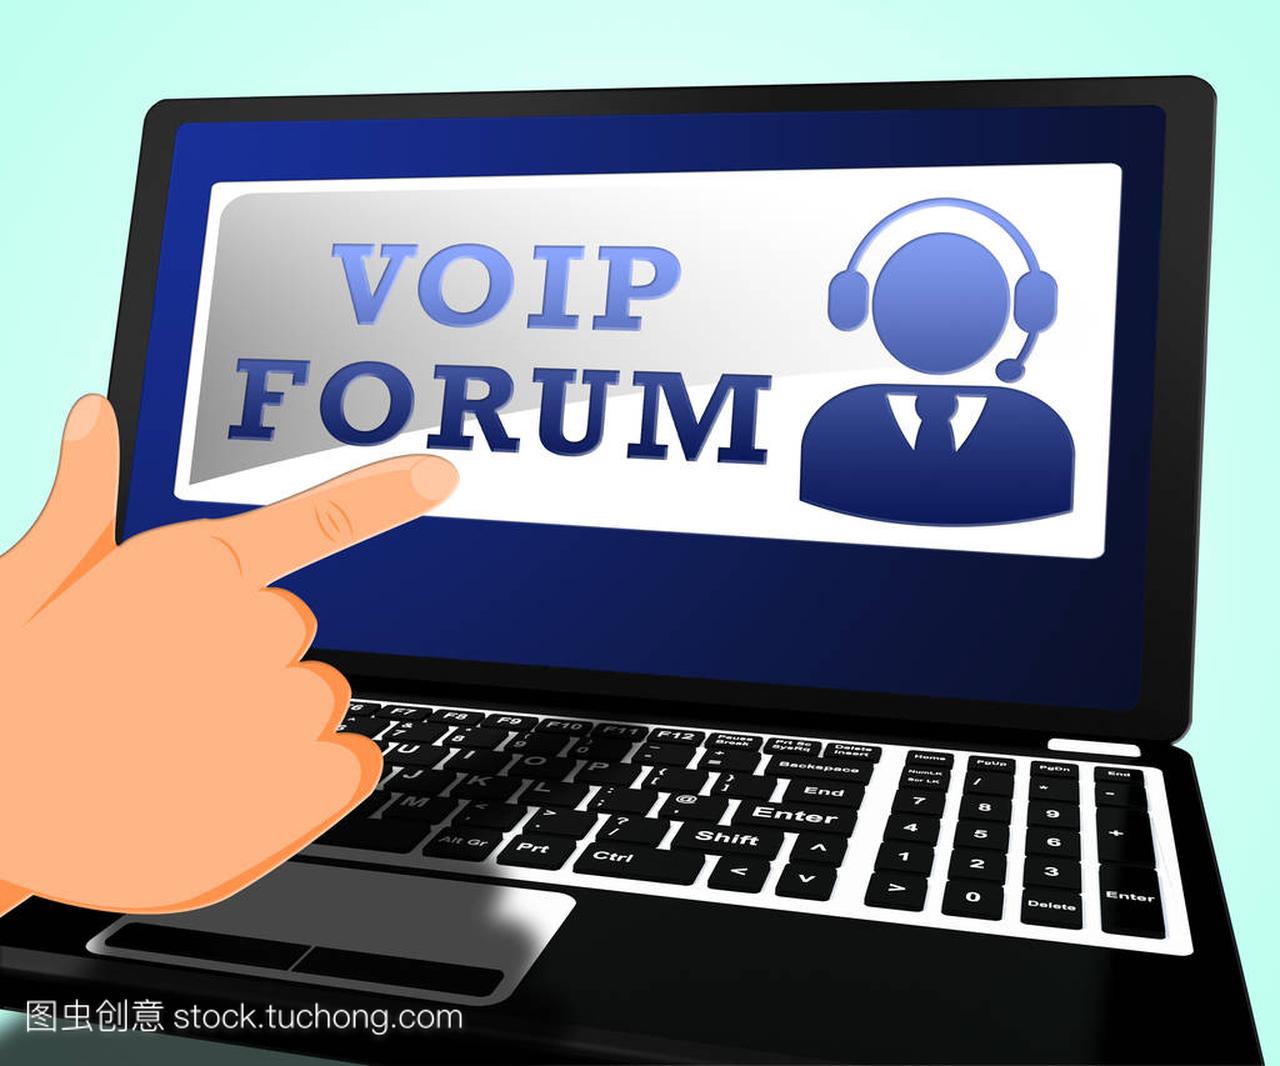 Voip 论坛意味着互联网语音 3d 图